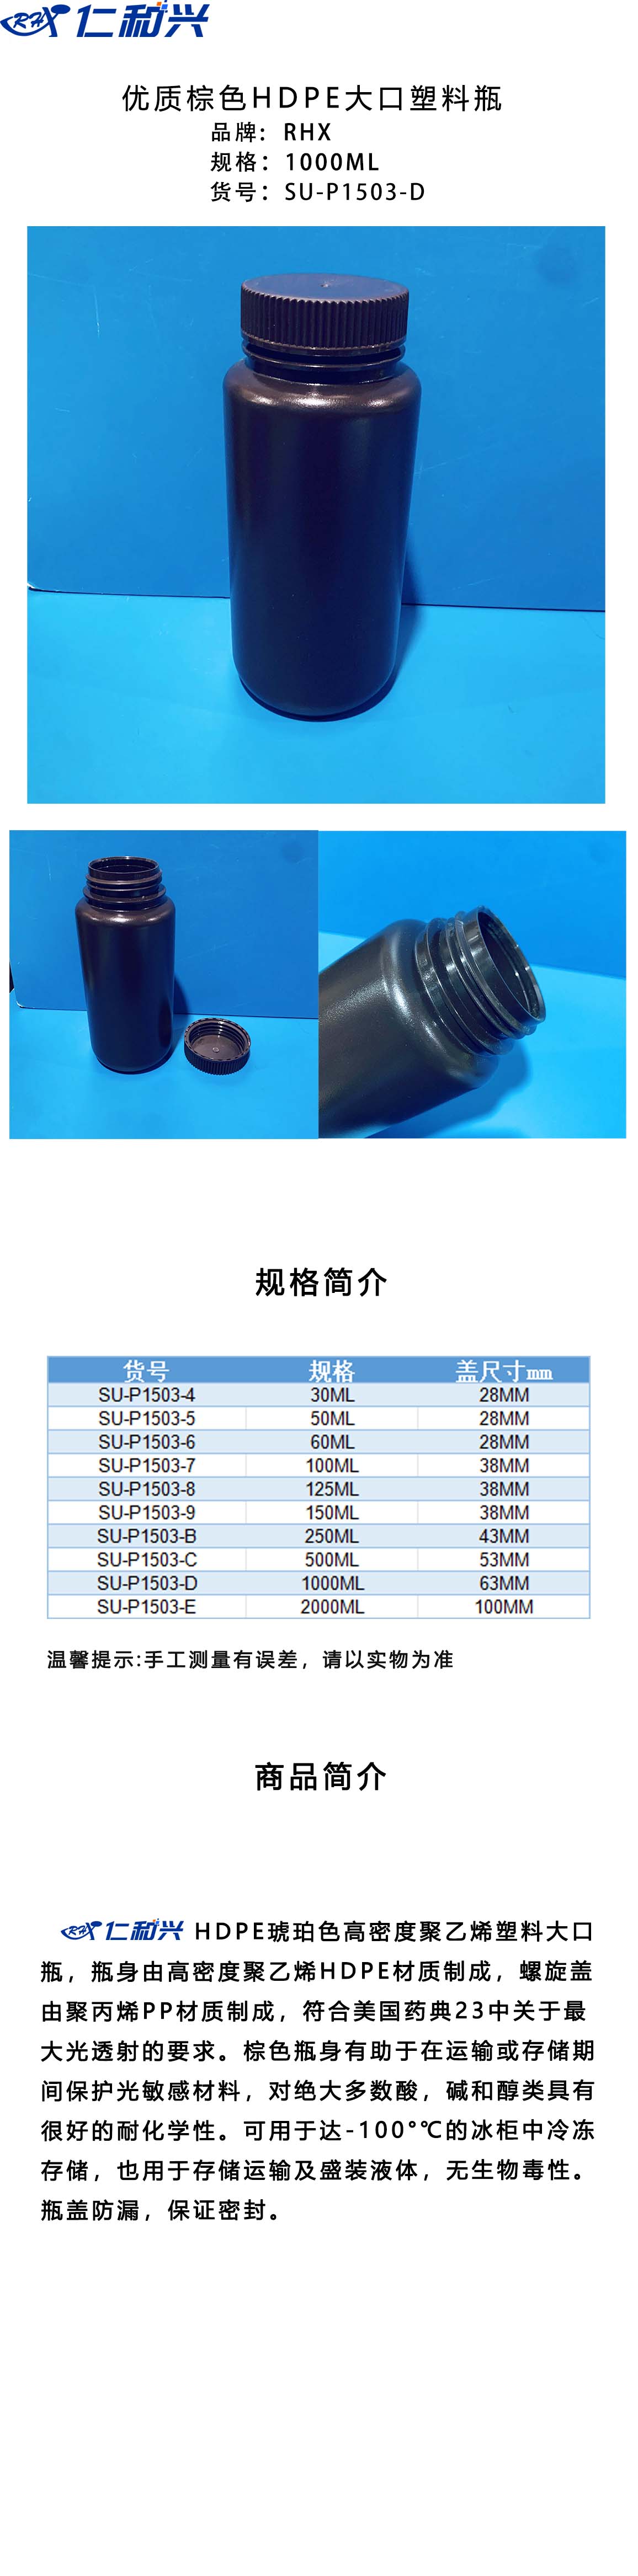 SU-P1503-D 棕色HDPE 大口塑料瓶 长图模板.jpg